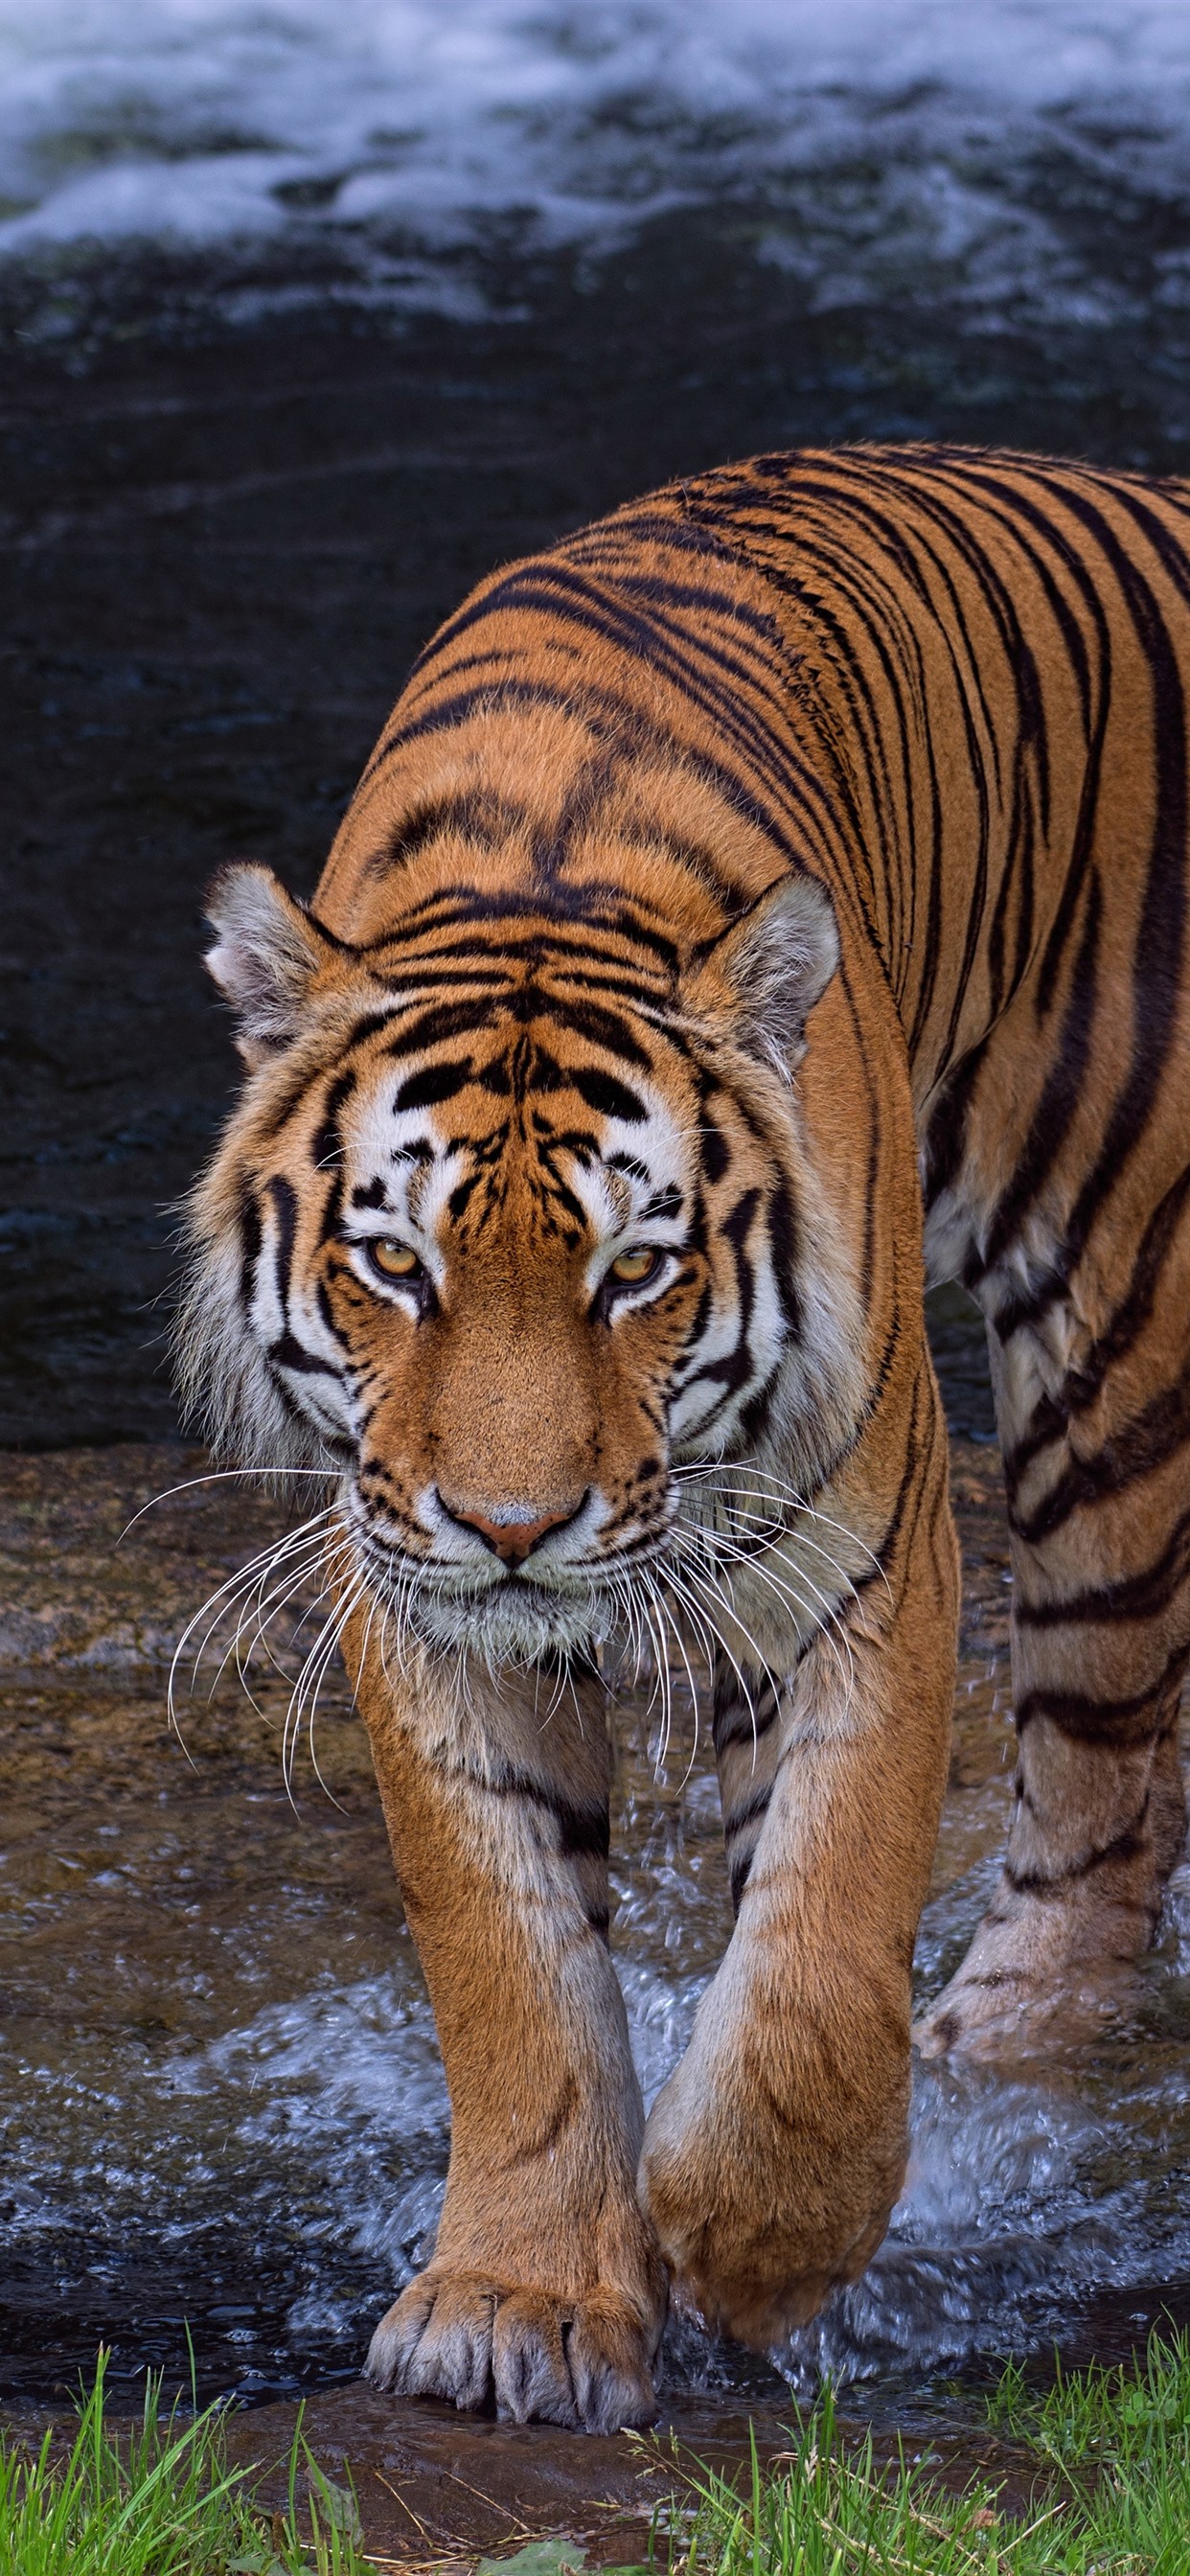 free download beautiful wallpapers for mobile phones,tiger,mammal,wildlife,vertebrate,bengal tiger